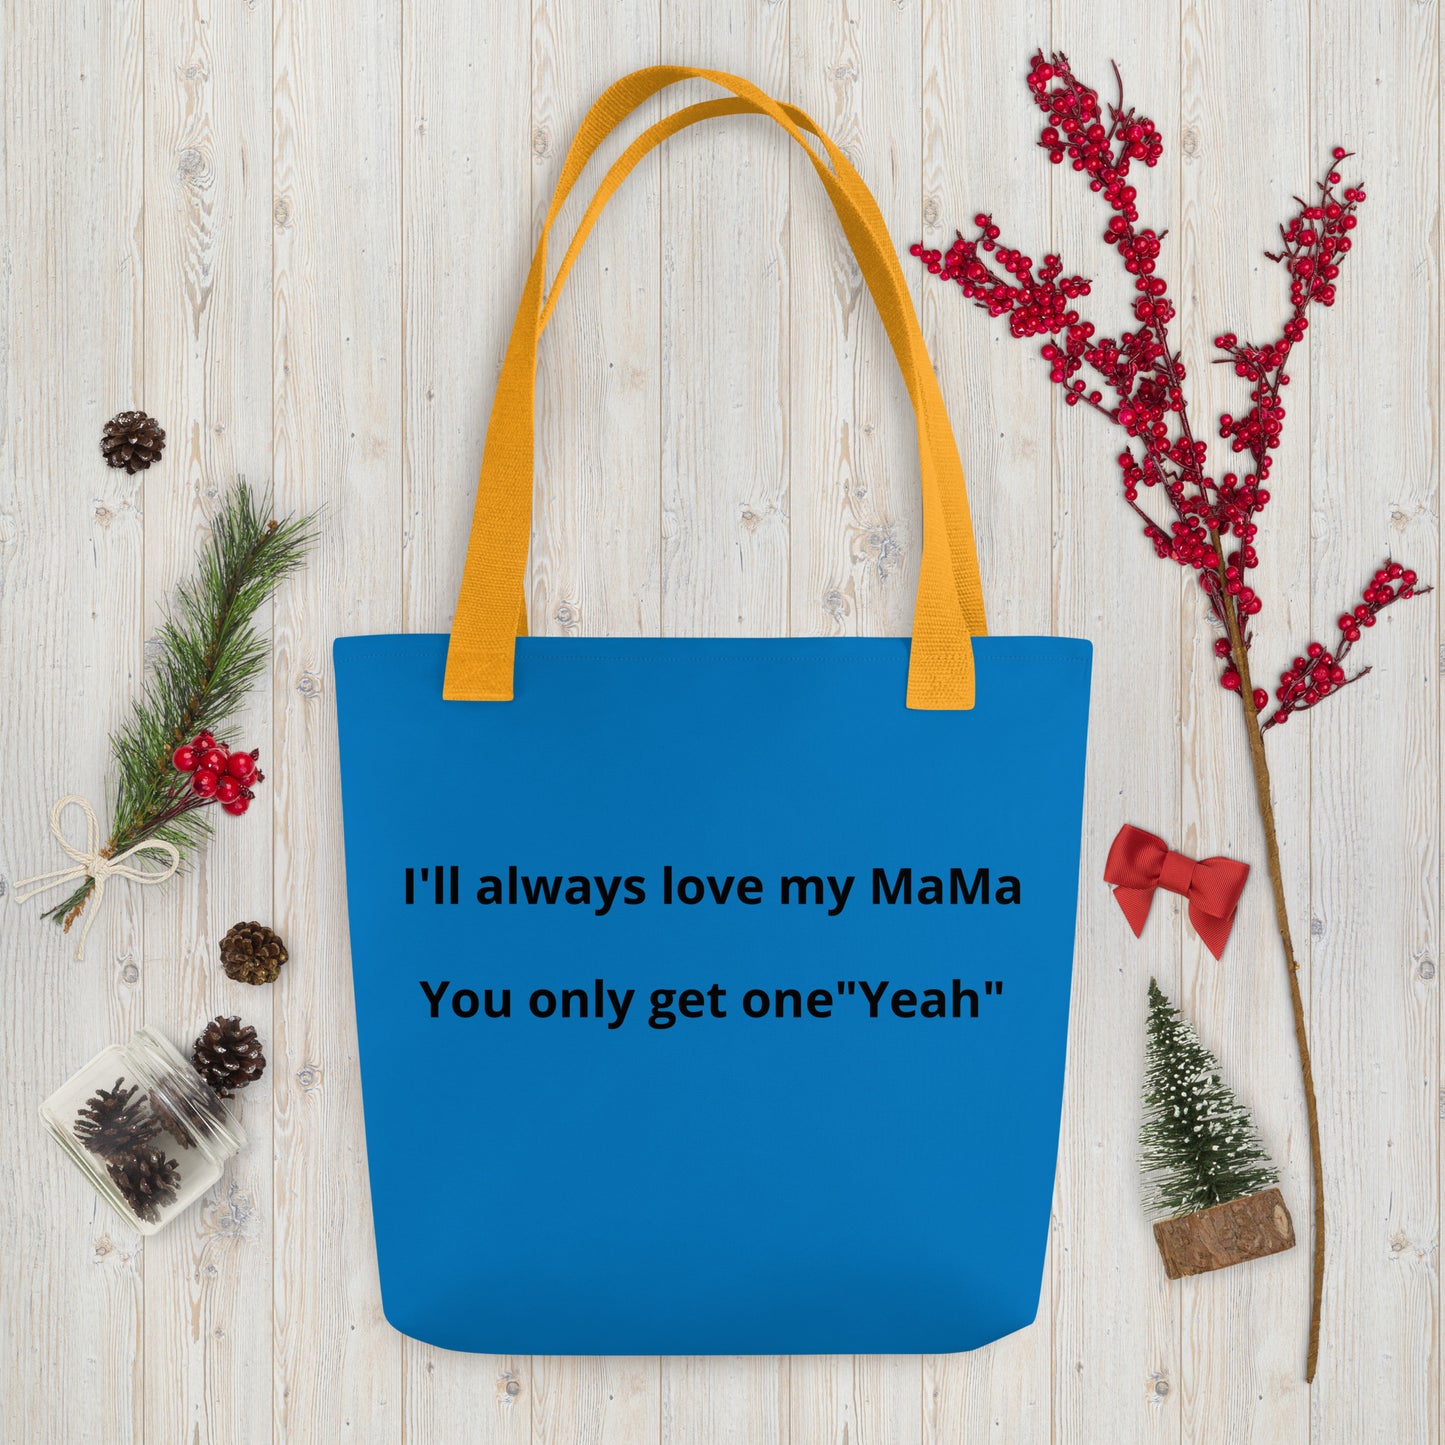 I'll always love my Mama Tote bag